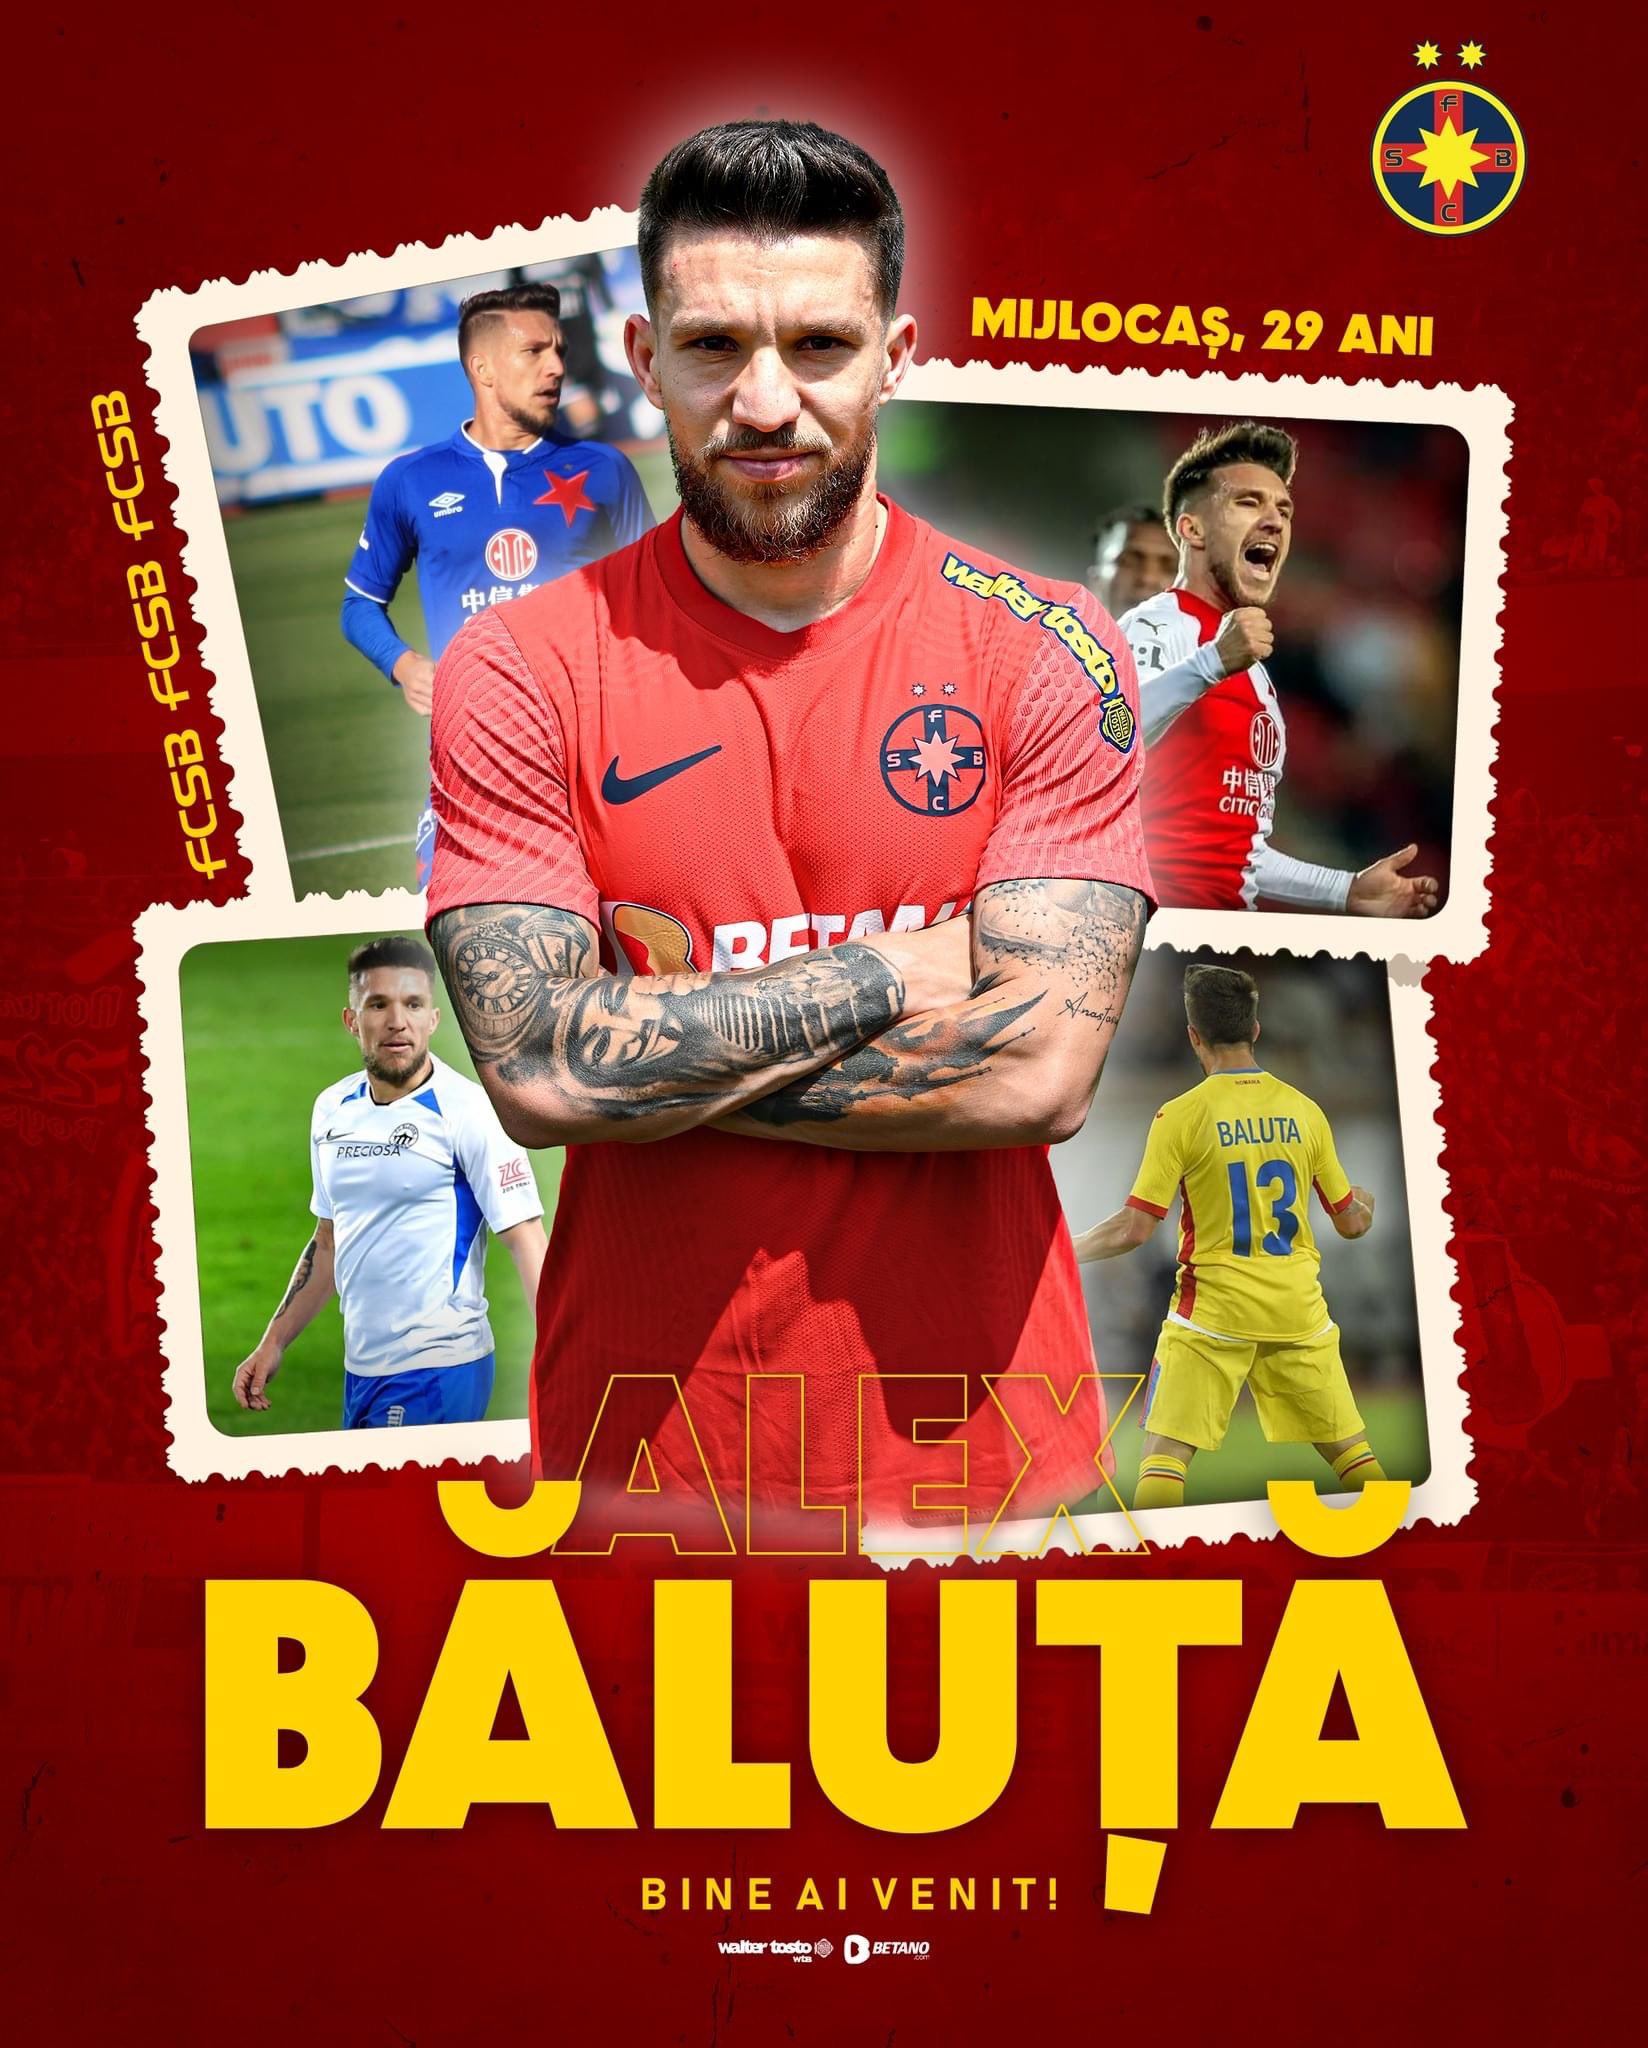 FCSB (FC Steaua Bucuresti) (@FCSteaua) / X